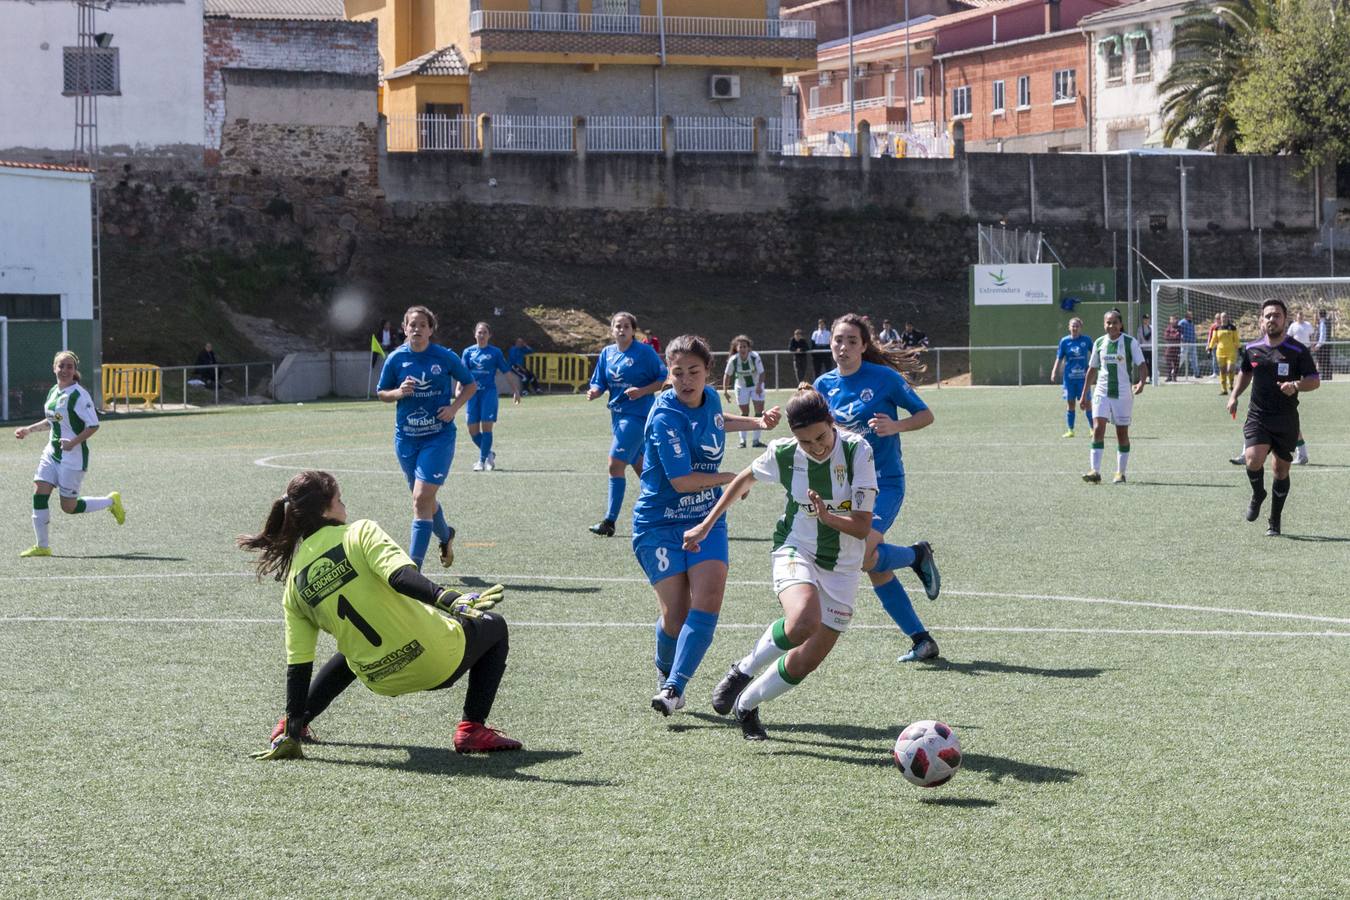 El ascenso del Córdoba CF Femenino, en imágenes